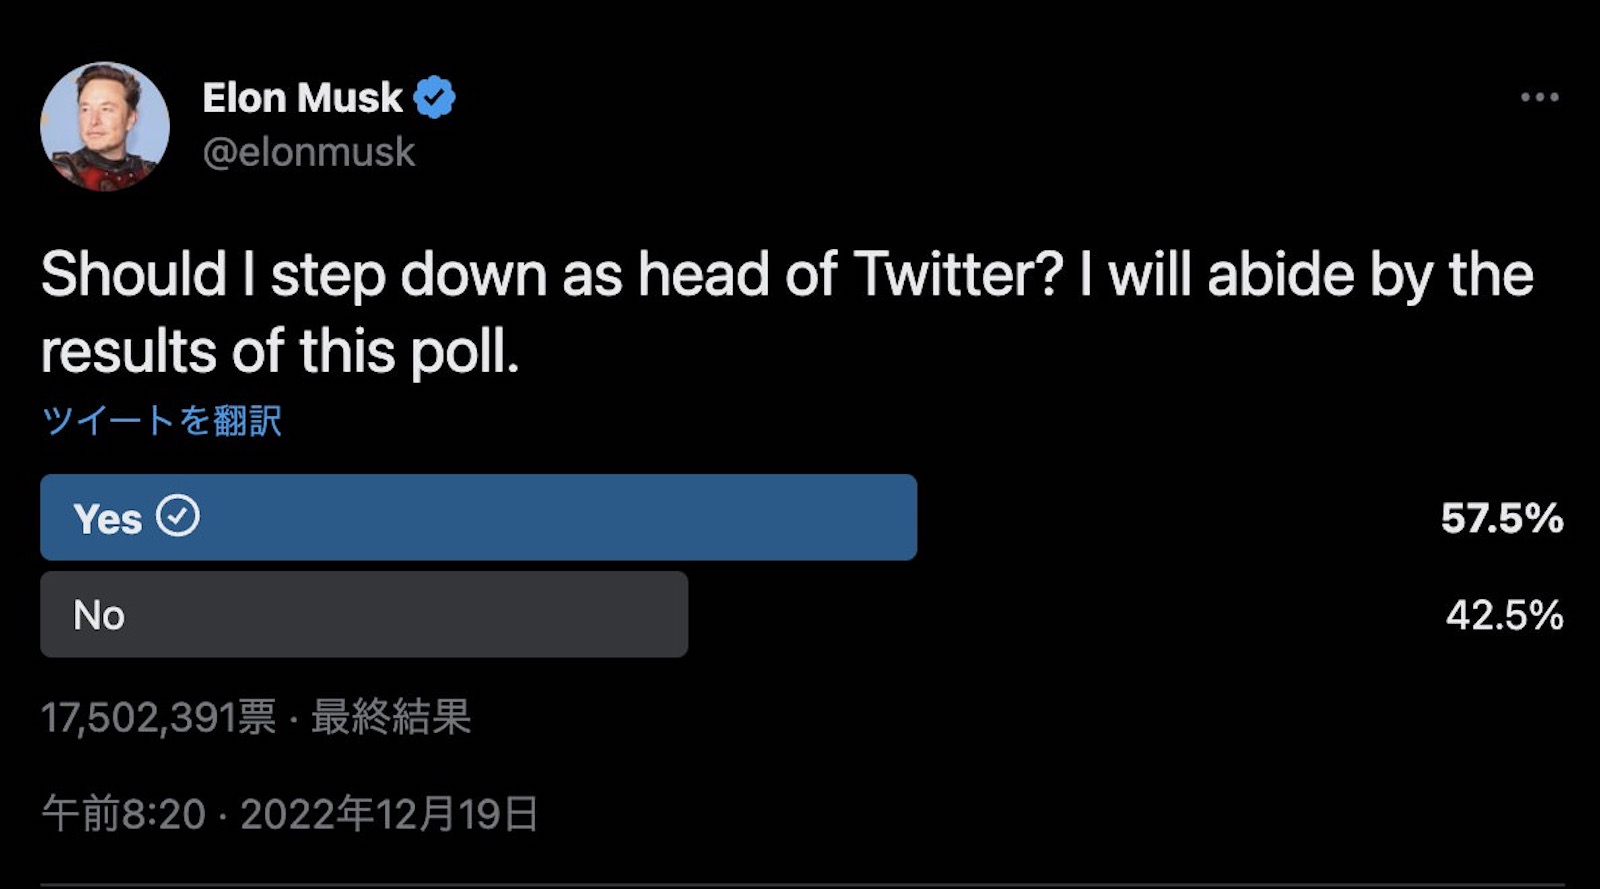 Elon musk should step down as head of twitter